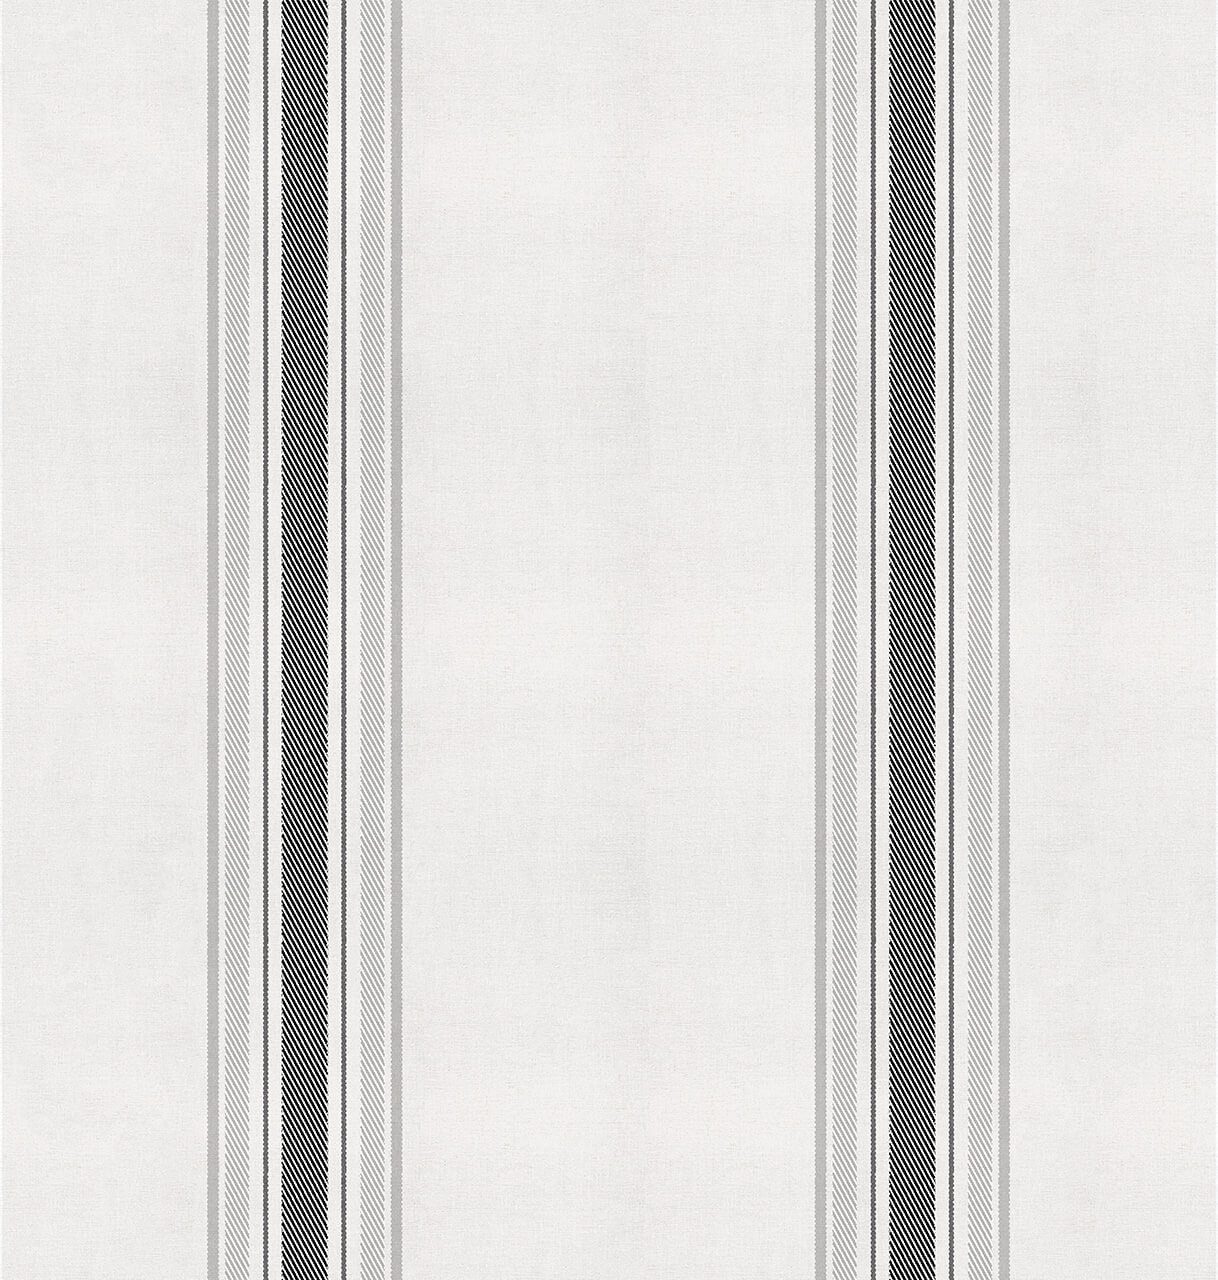 Stripe, set of 2 rolls